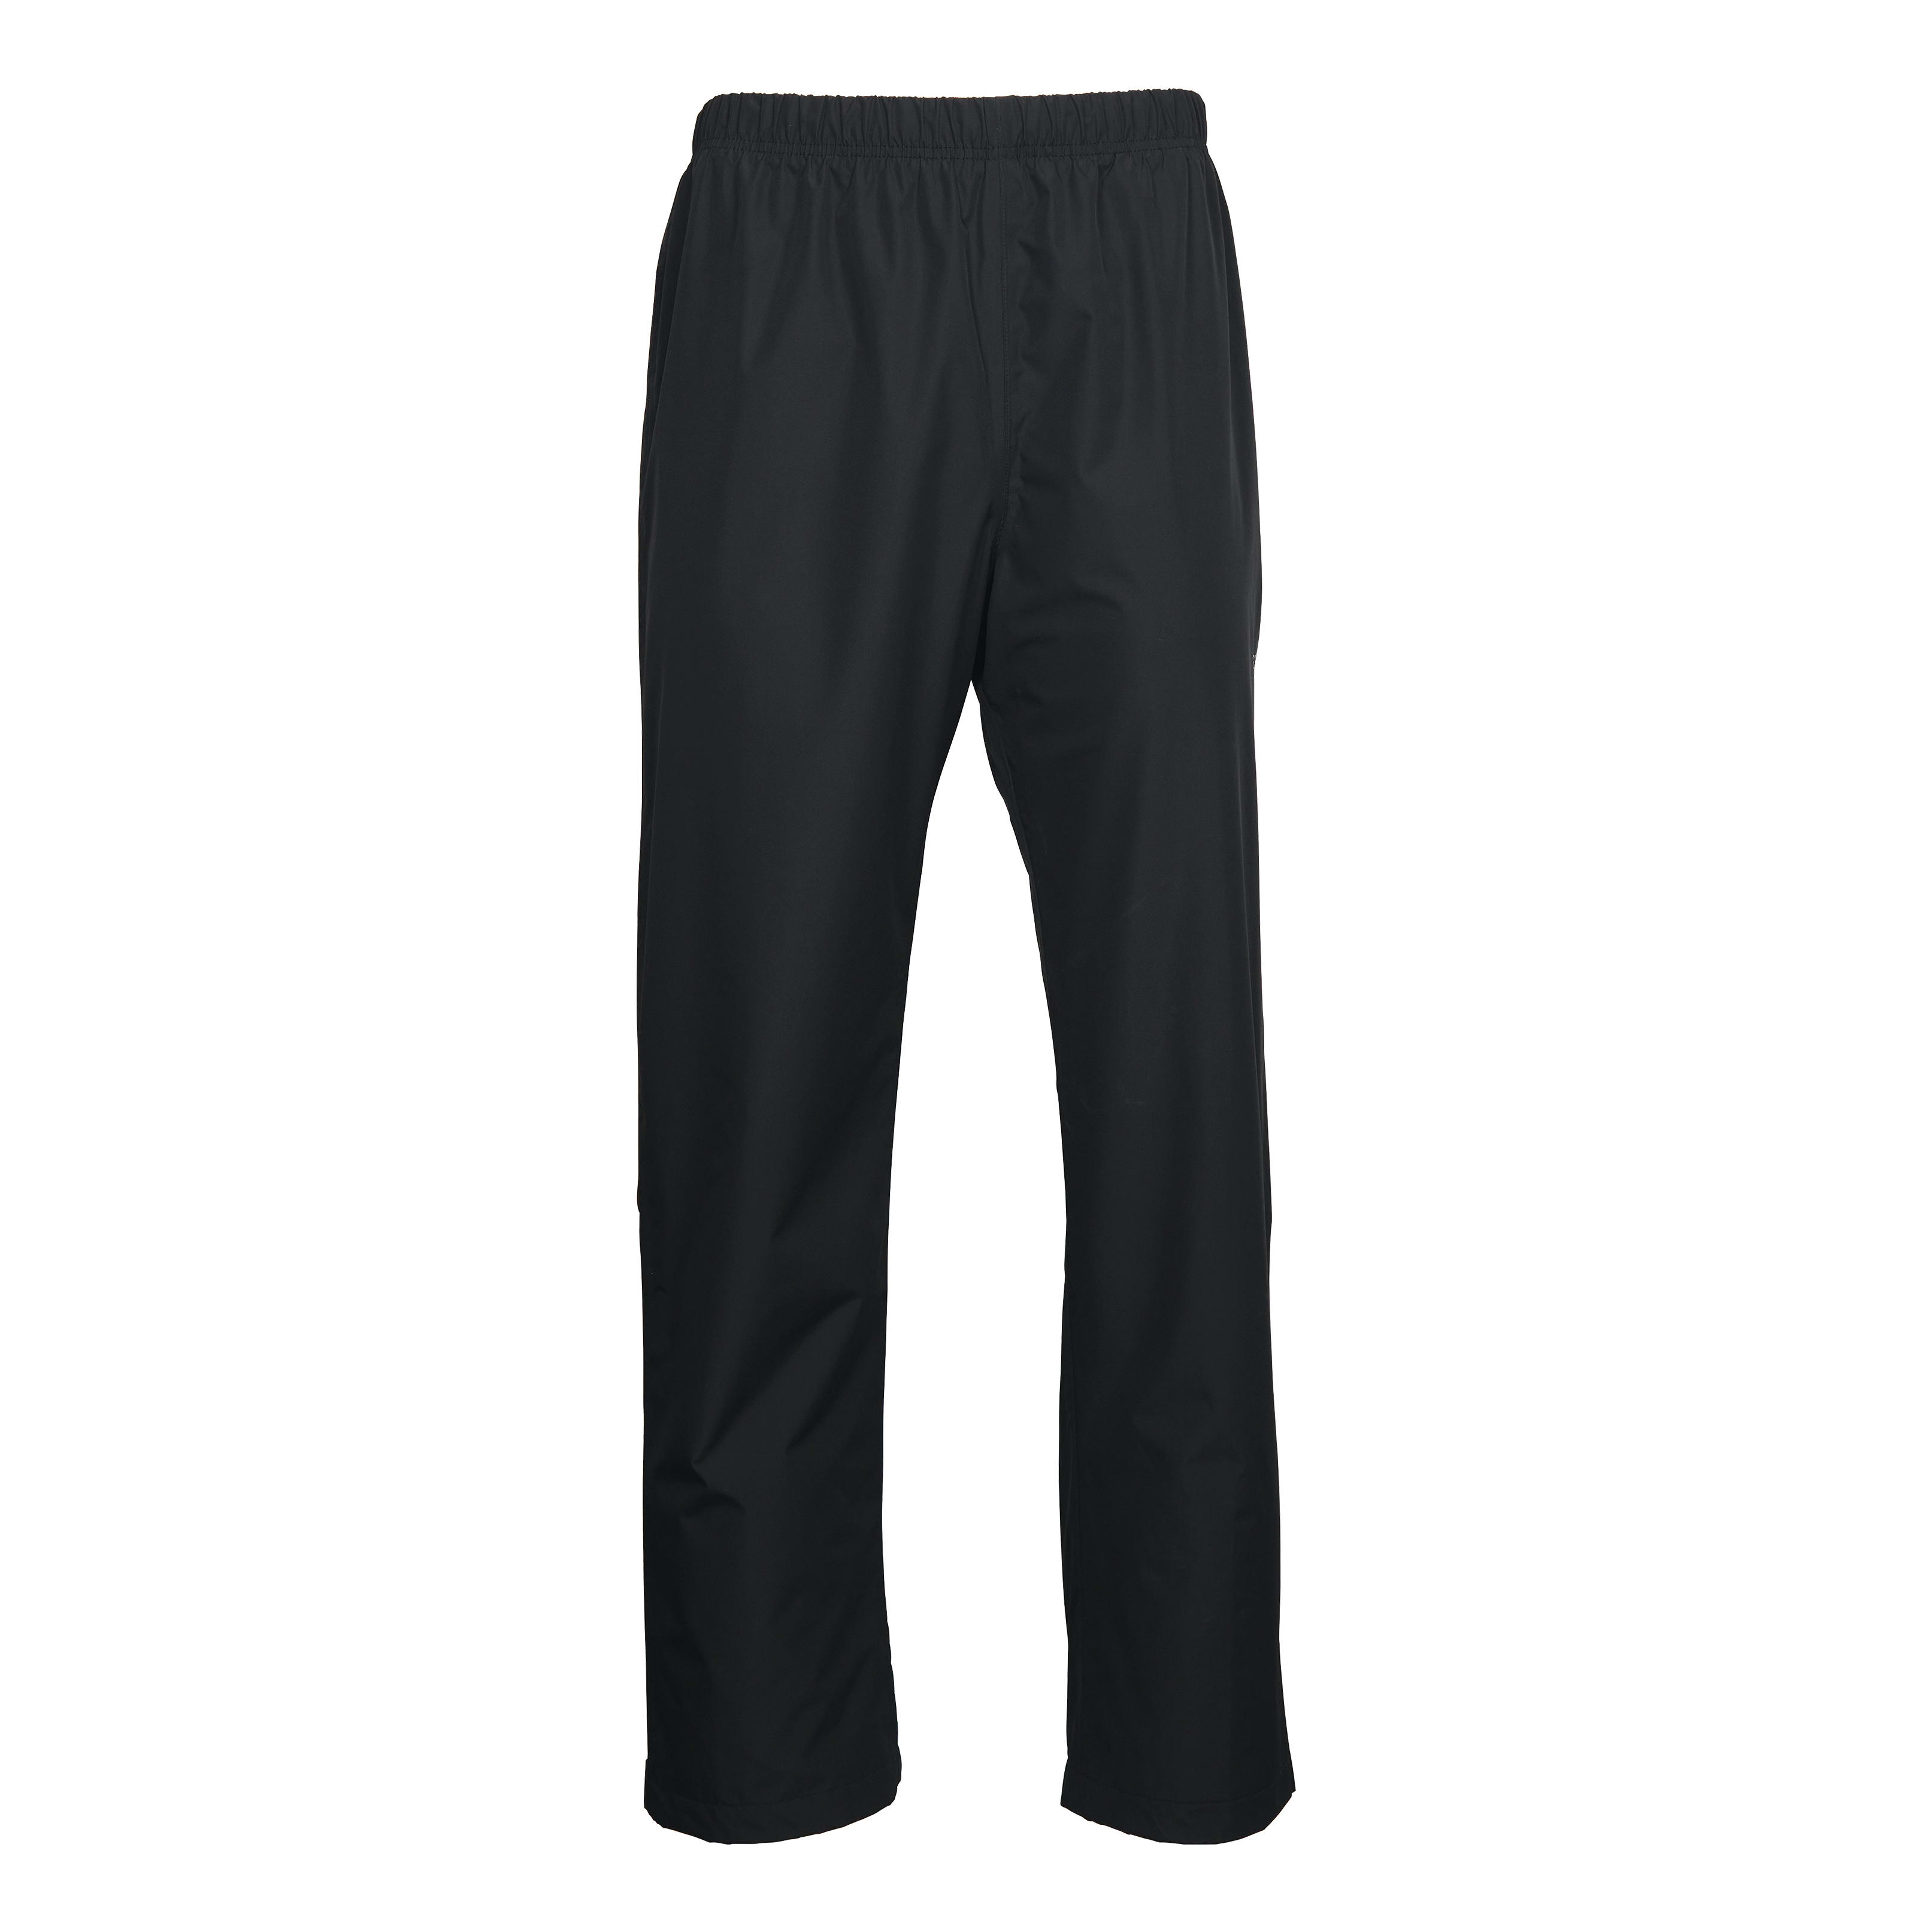 Guidewear Women's GORE-TEX® PacLite® Rainy River® Pants